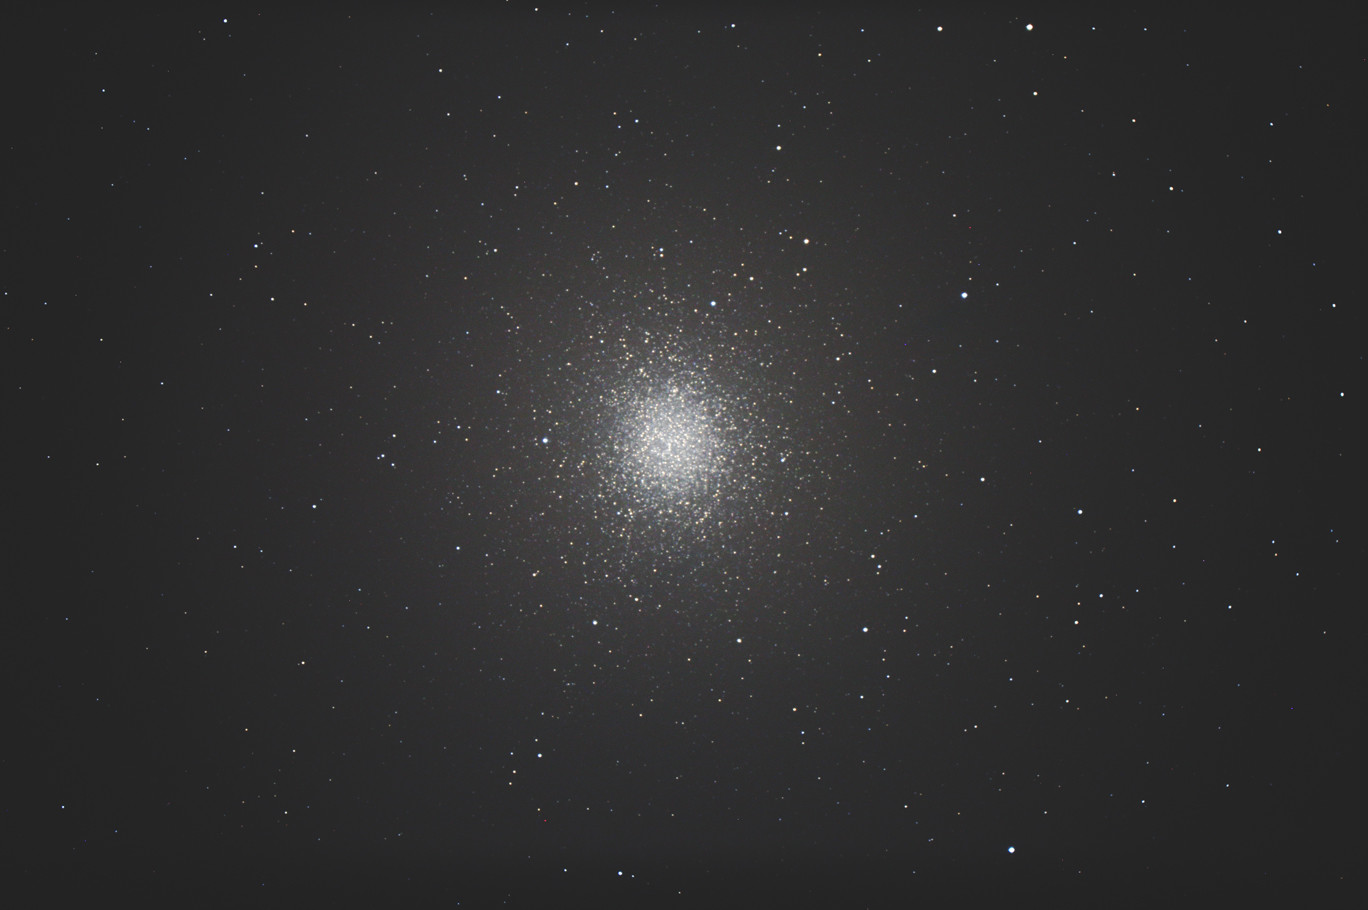 NGC5139 from PTC last night